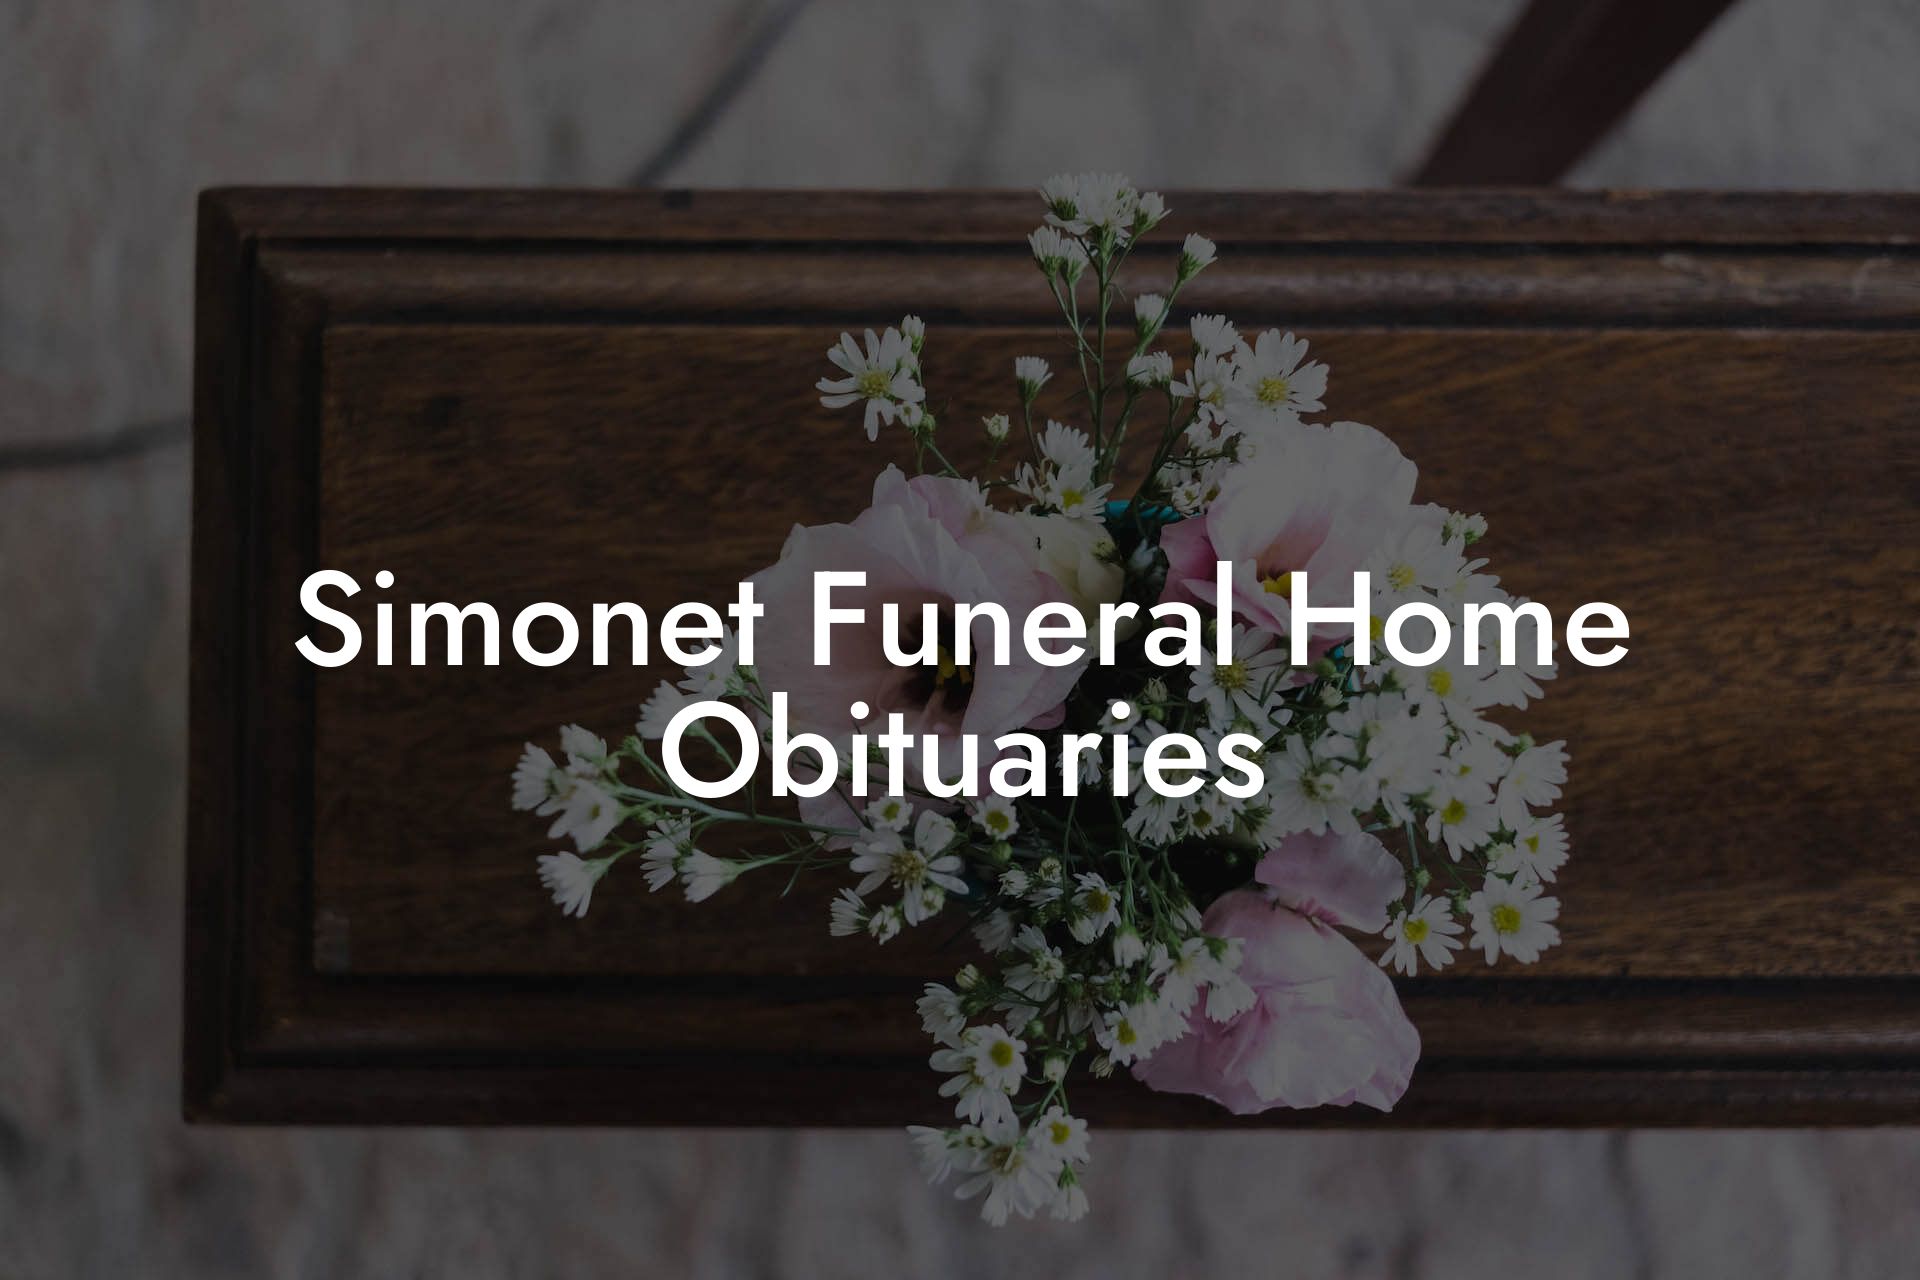 Simonet Funeral Home Obituaries